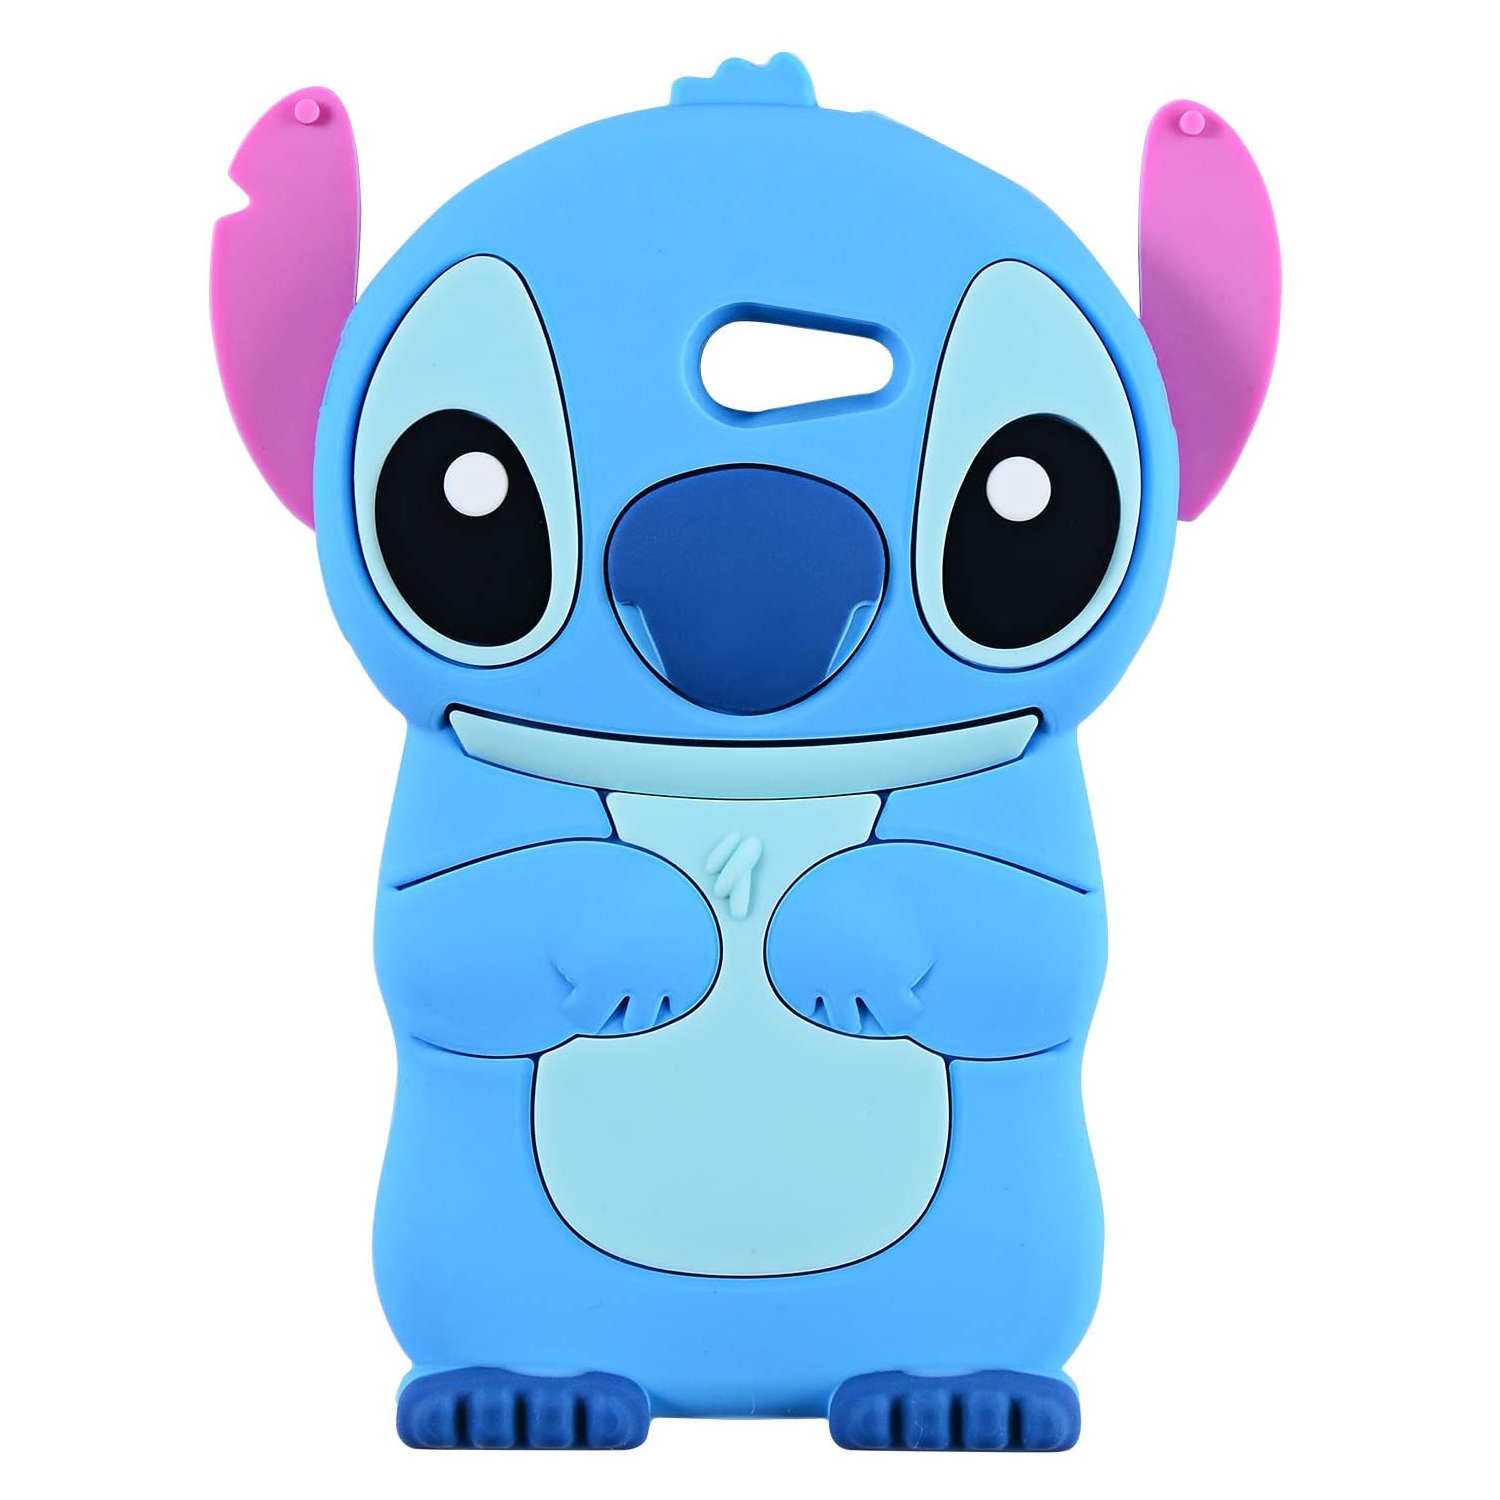 Blue Stitch Case for Samsung Galaxy J3 Emerge/J3 Prime,Express Prime 2,J3 Mission/J3 Eclipse,3D Cartoon Animal Cute Soft Sili